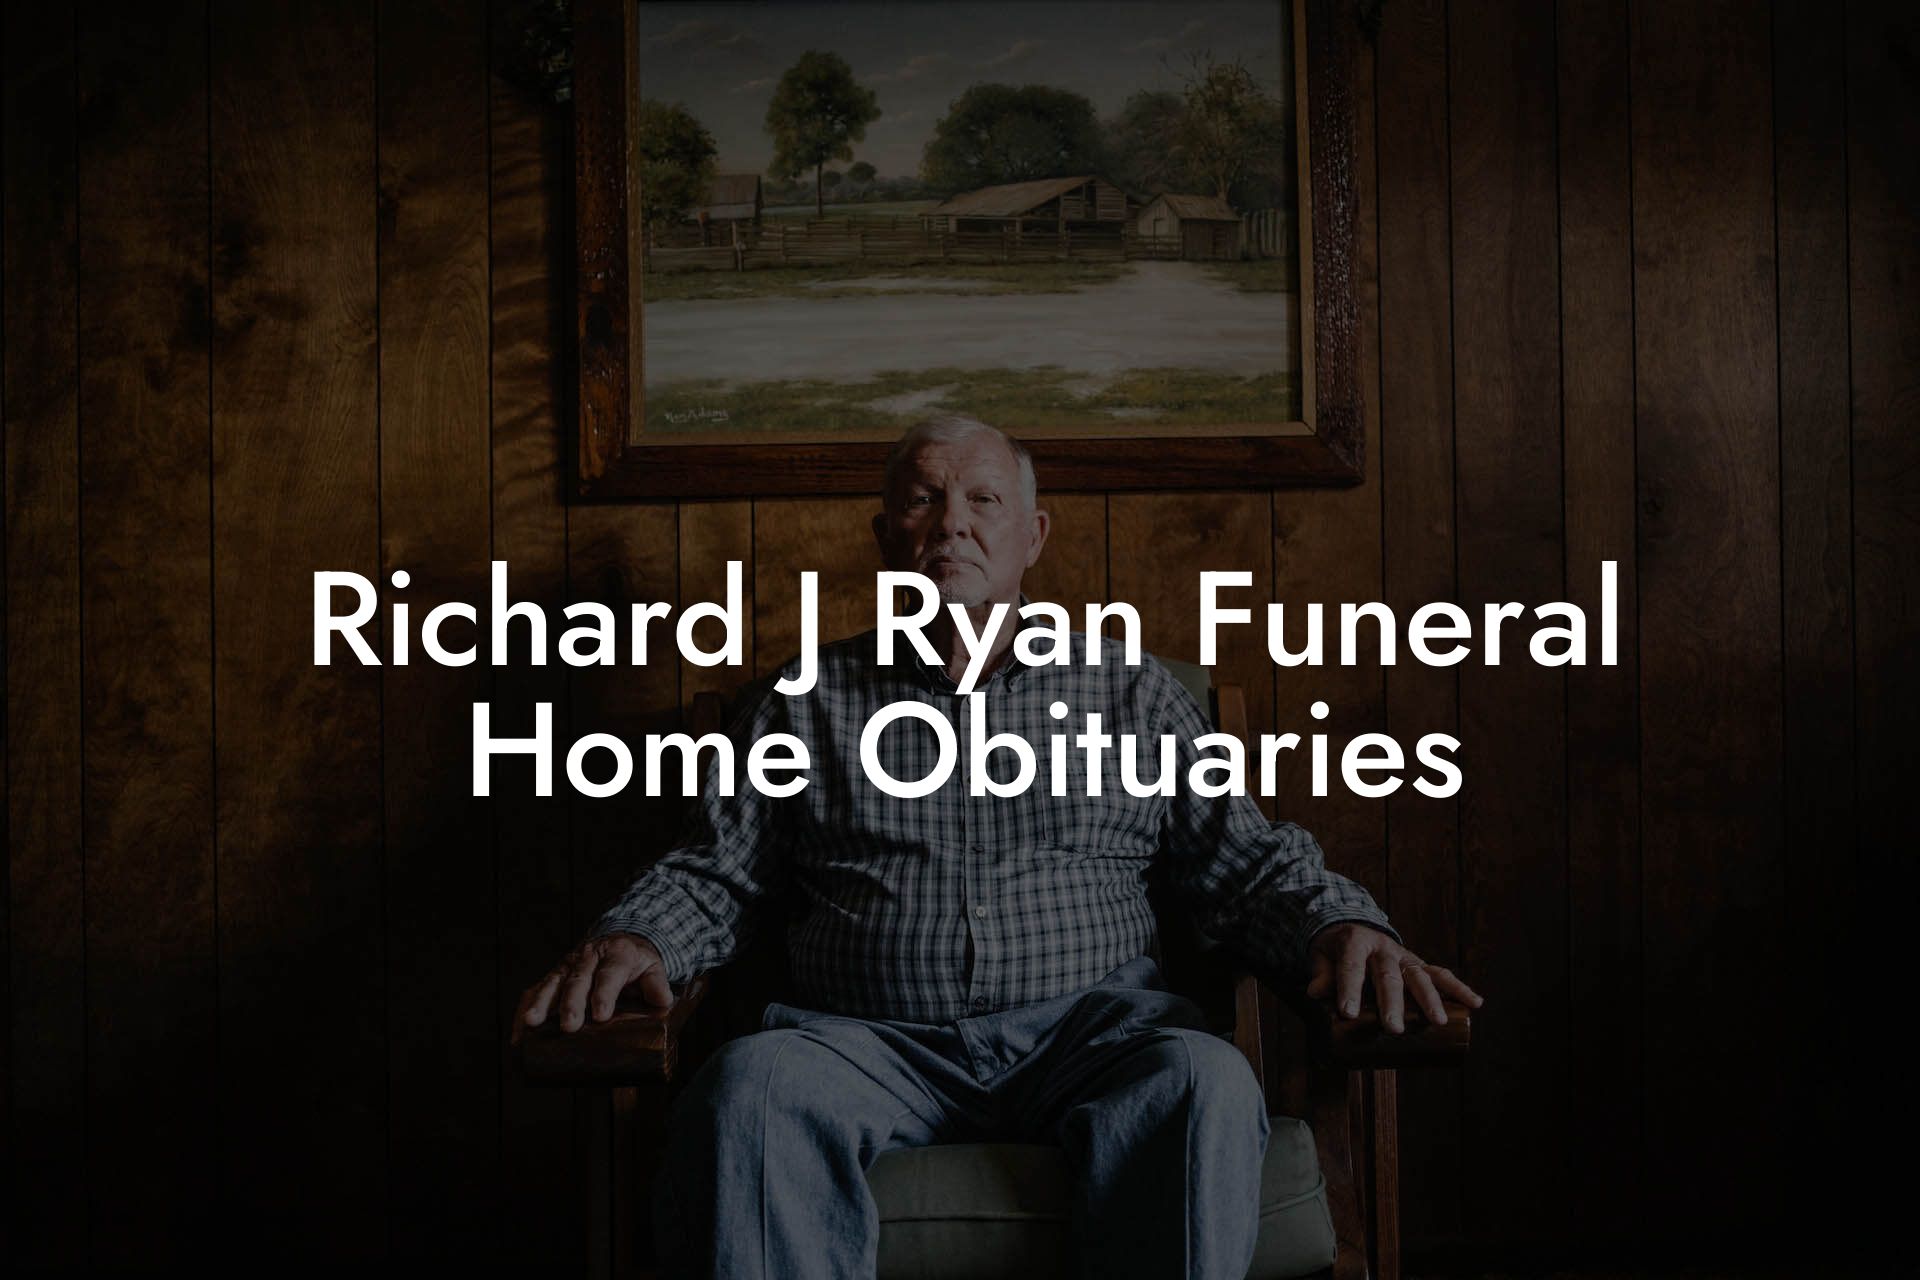 Richard J Ryan Funeral Home Obituaries